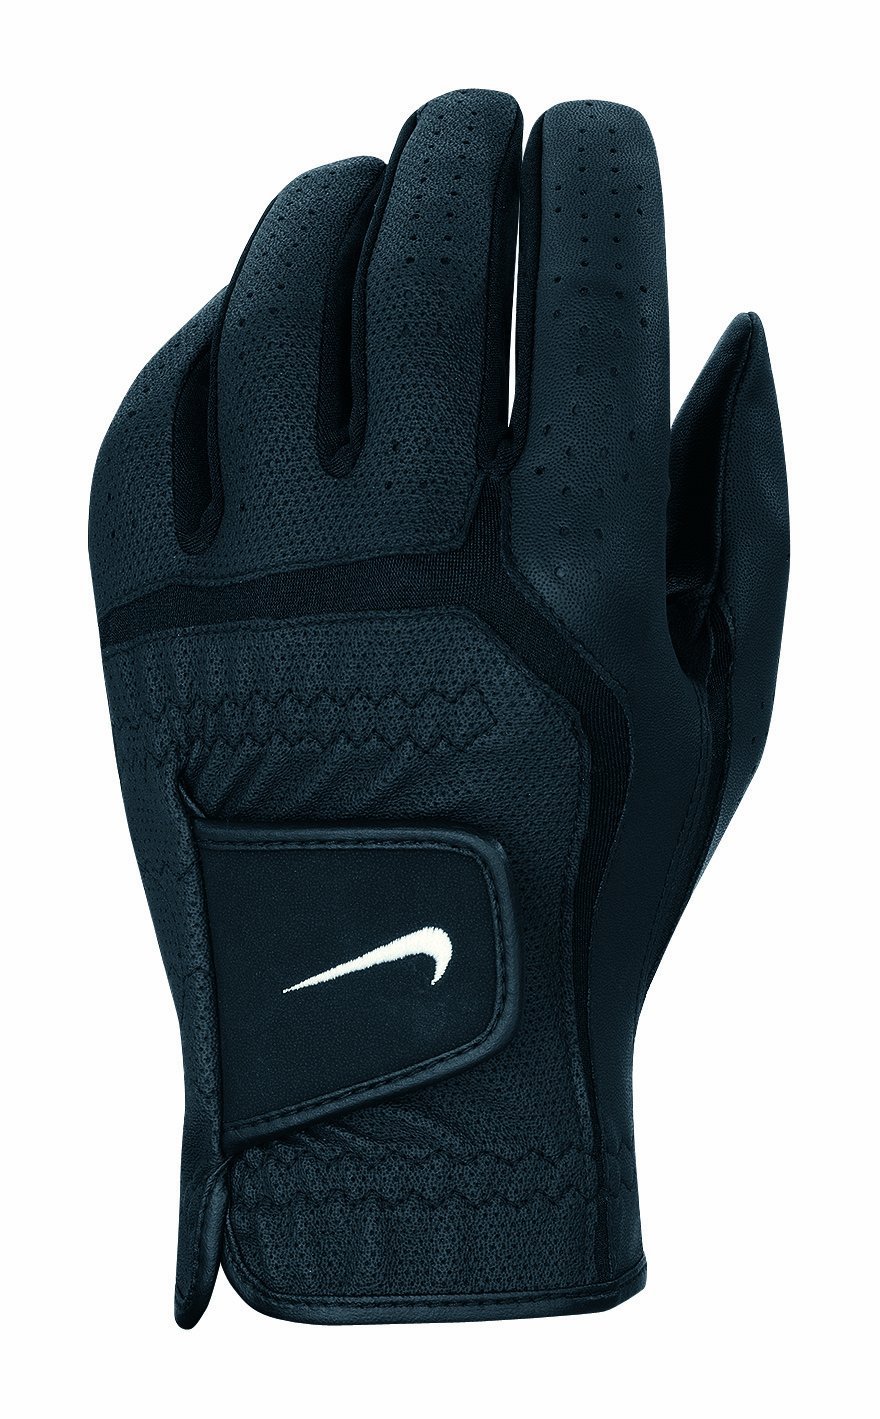 black nike golf glove